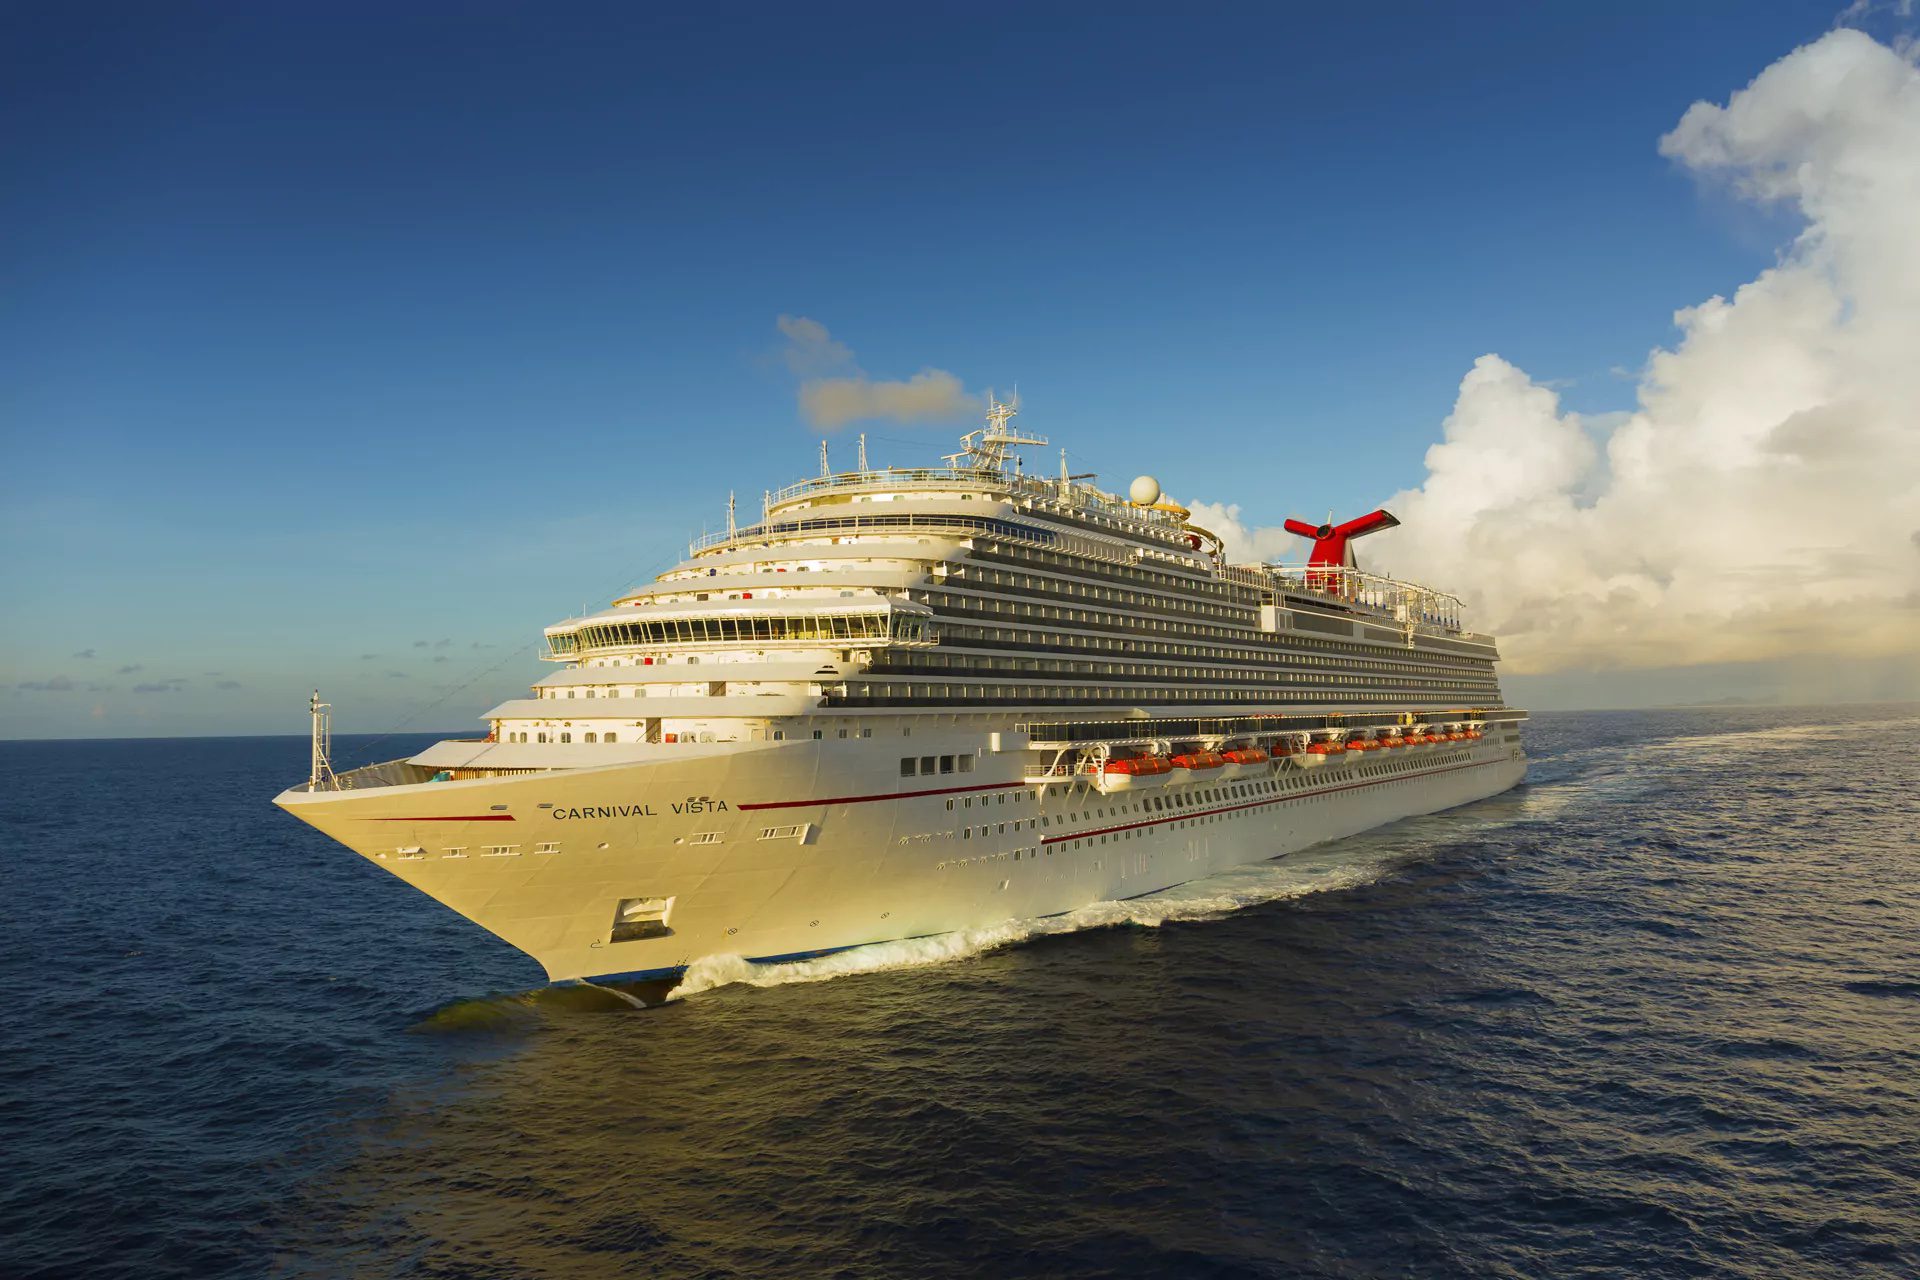 MS Carnival Vista at sea. Photo courtesy Carnival Cruise Line